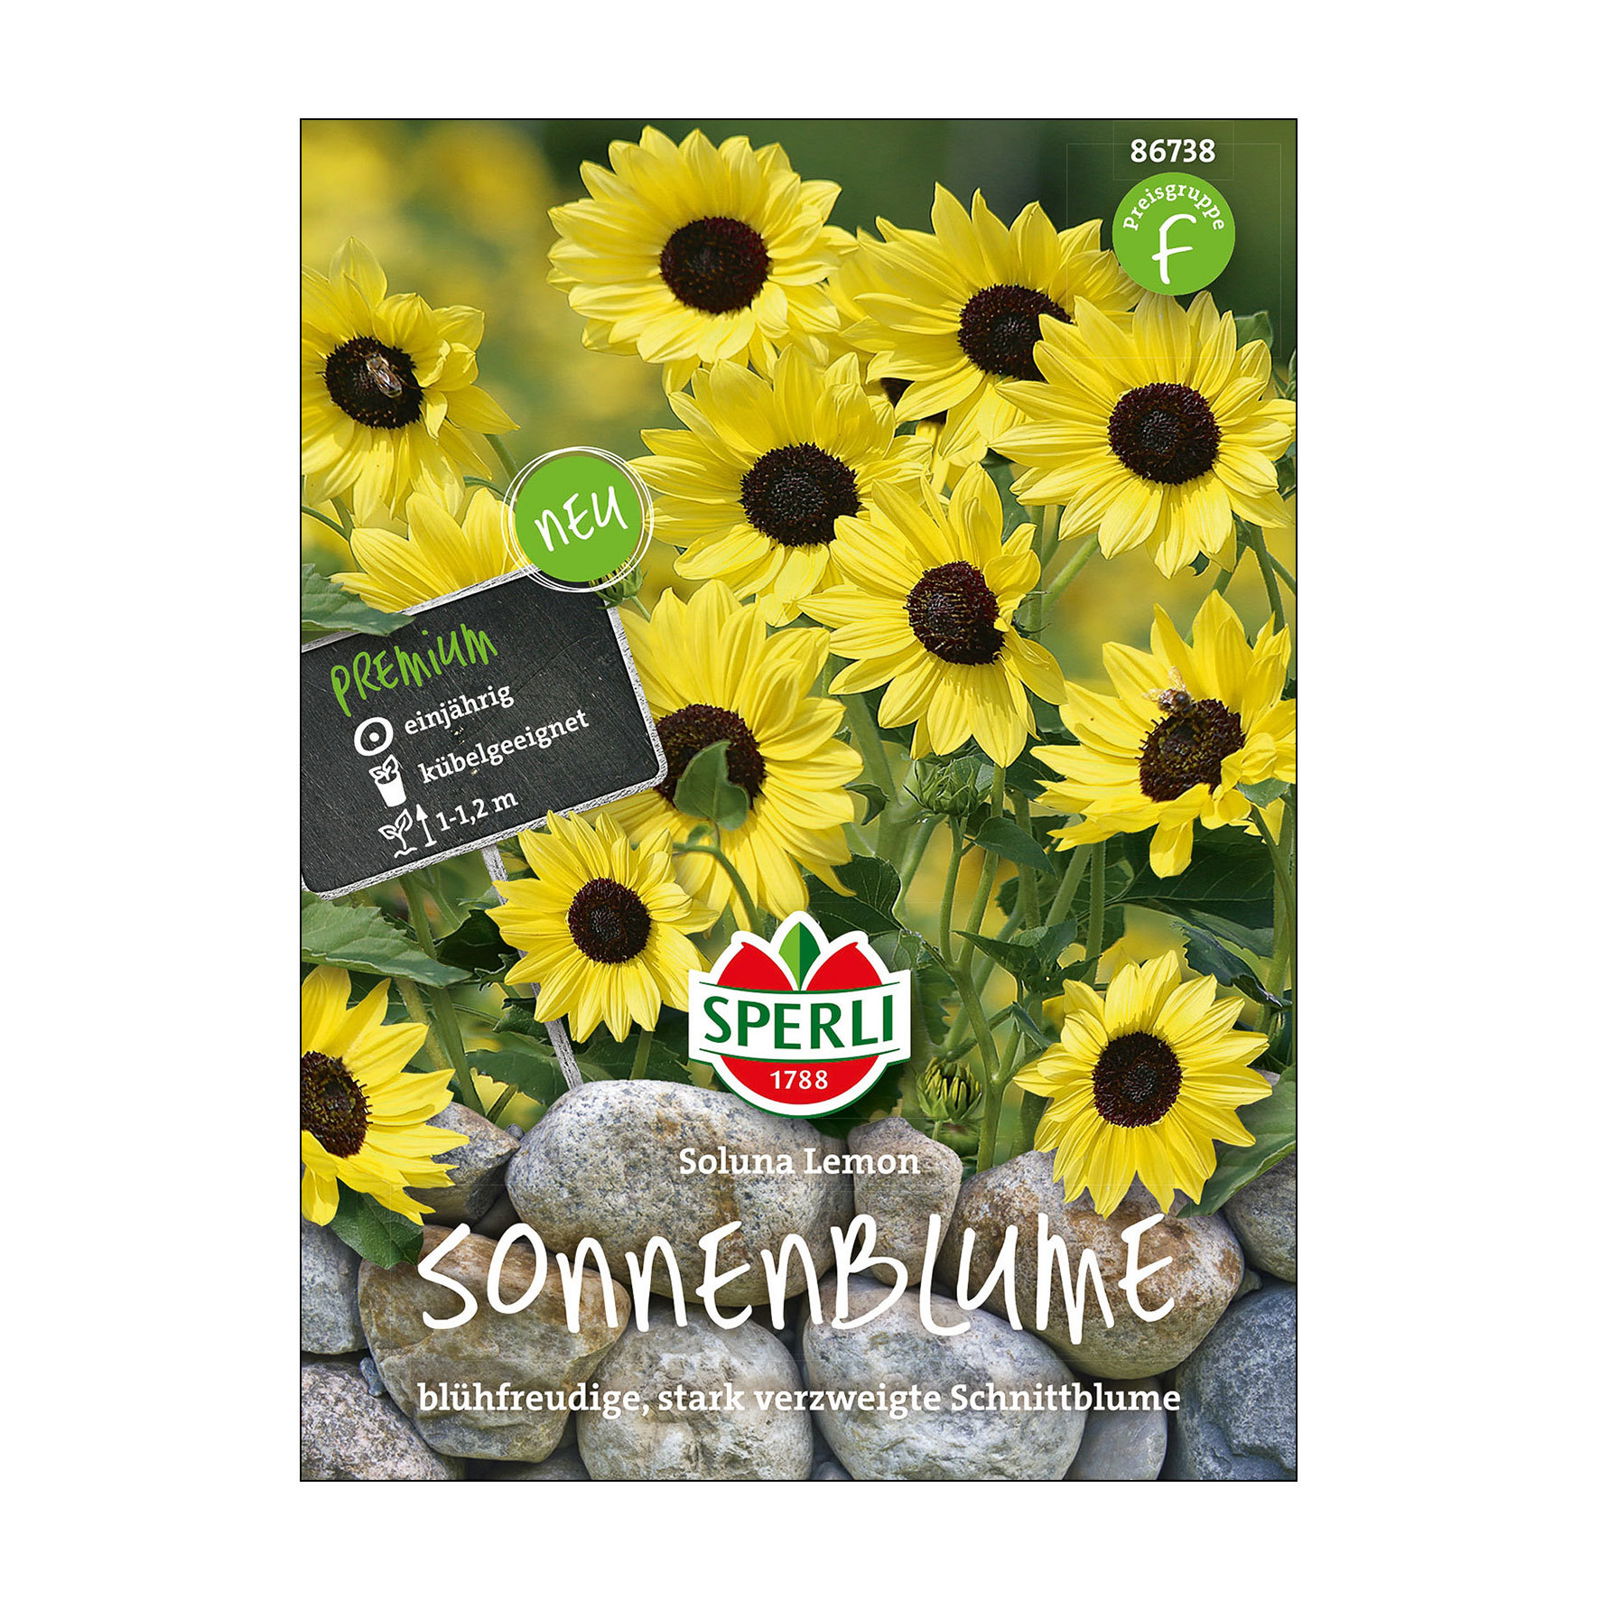 Blumensamen, Sonnenblume 'Soluna Lemon'